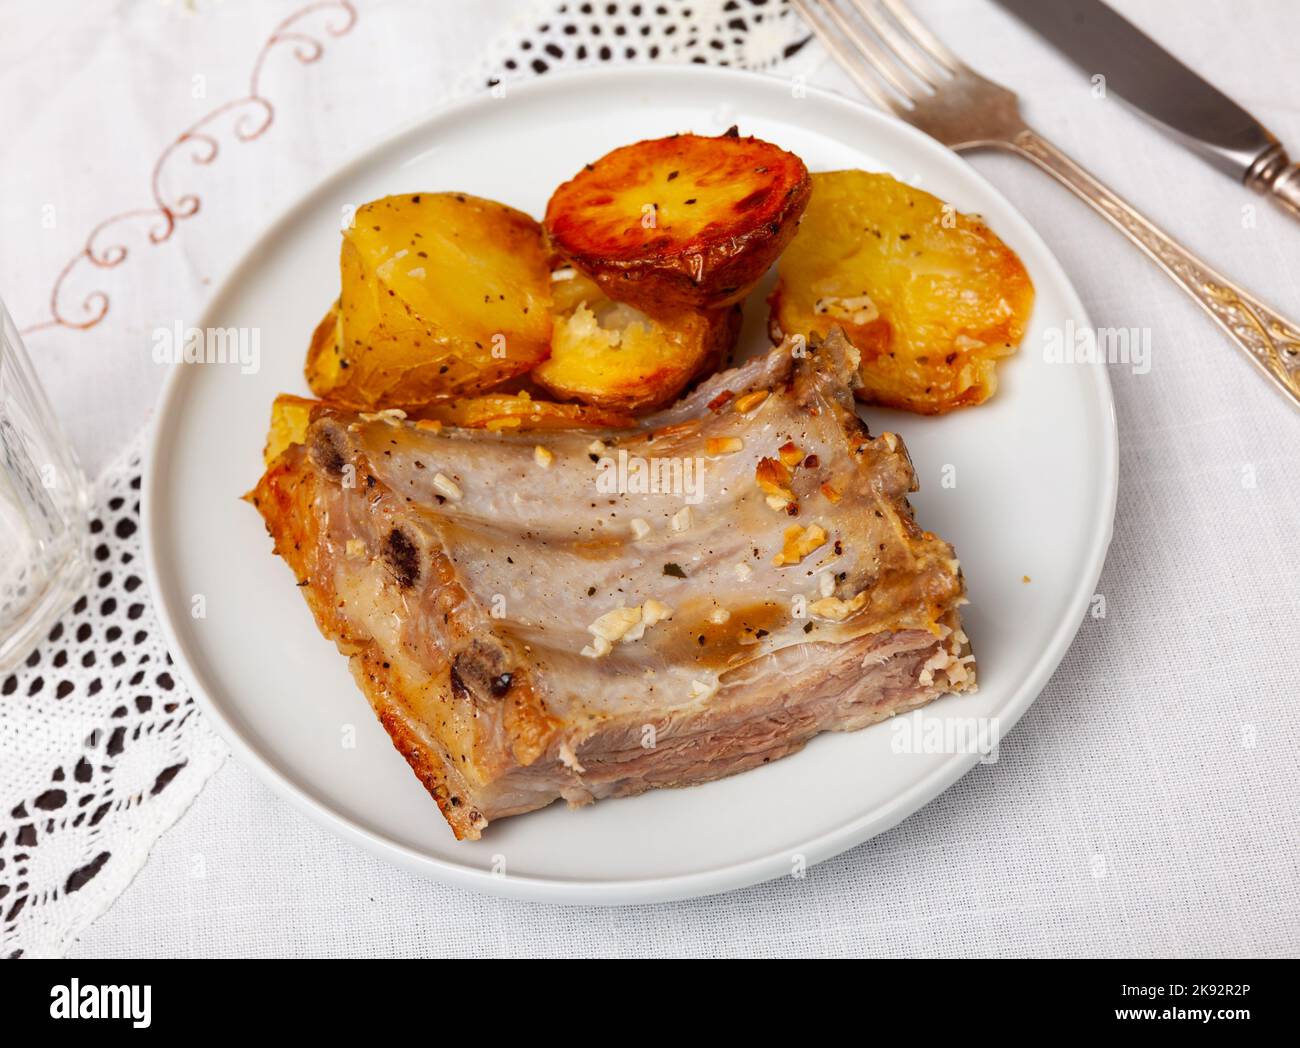 Ccostillas de cerdo - pork ribs with boiled potatoes Stock Photo